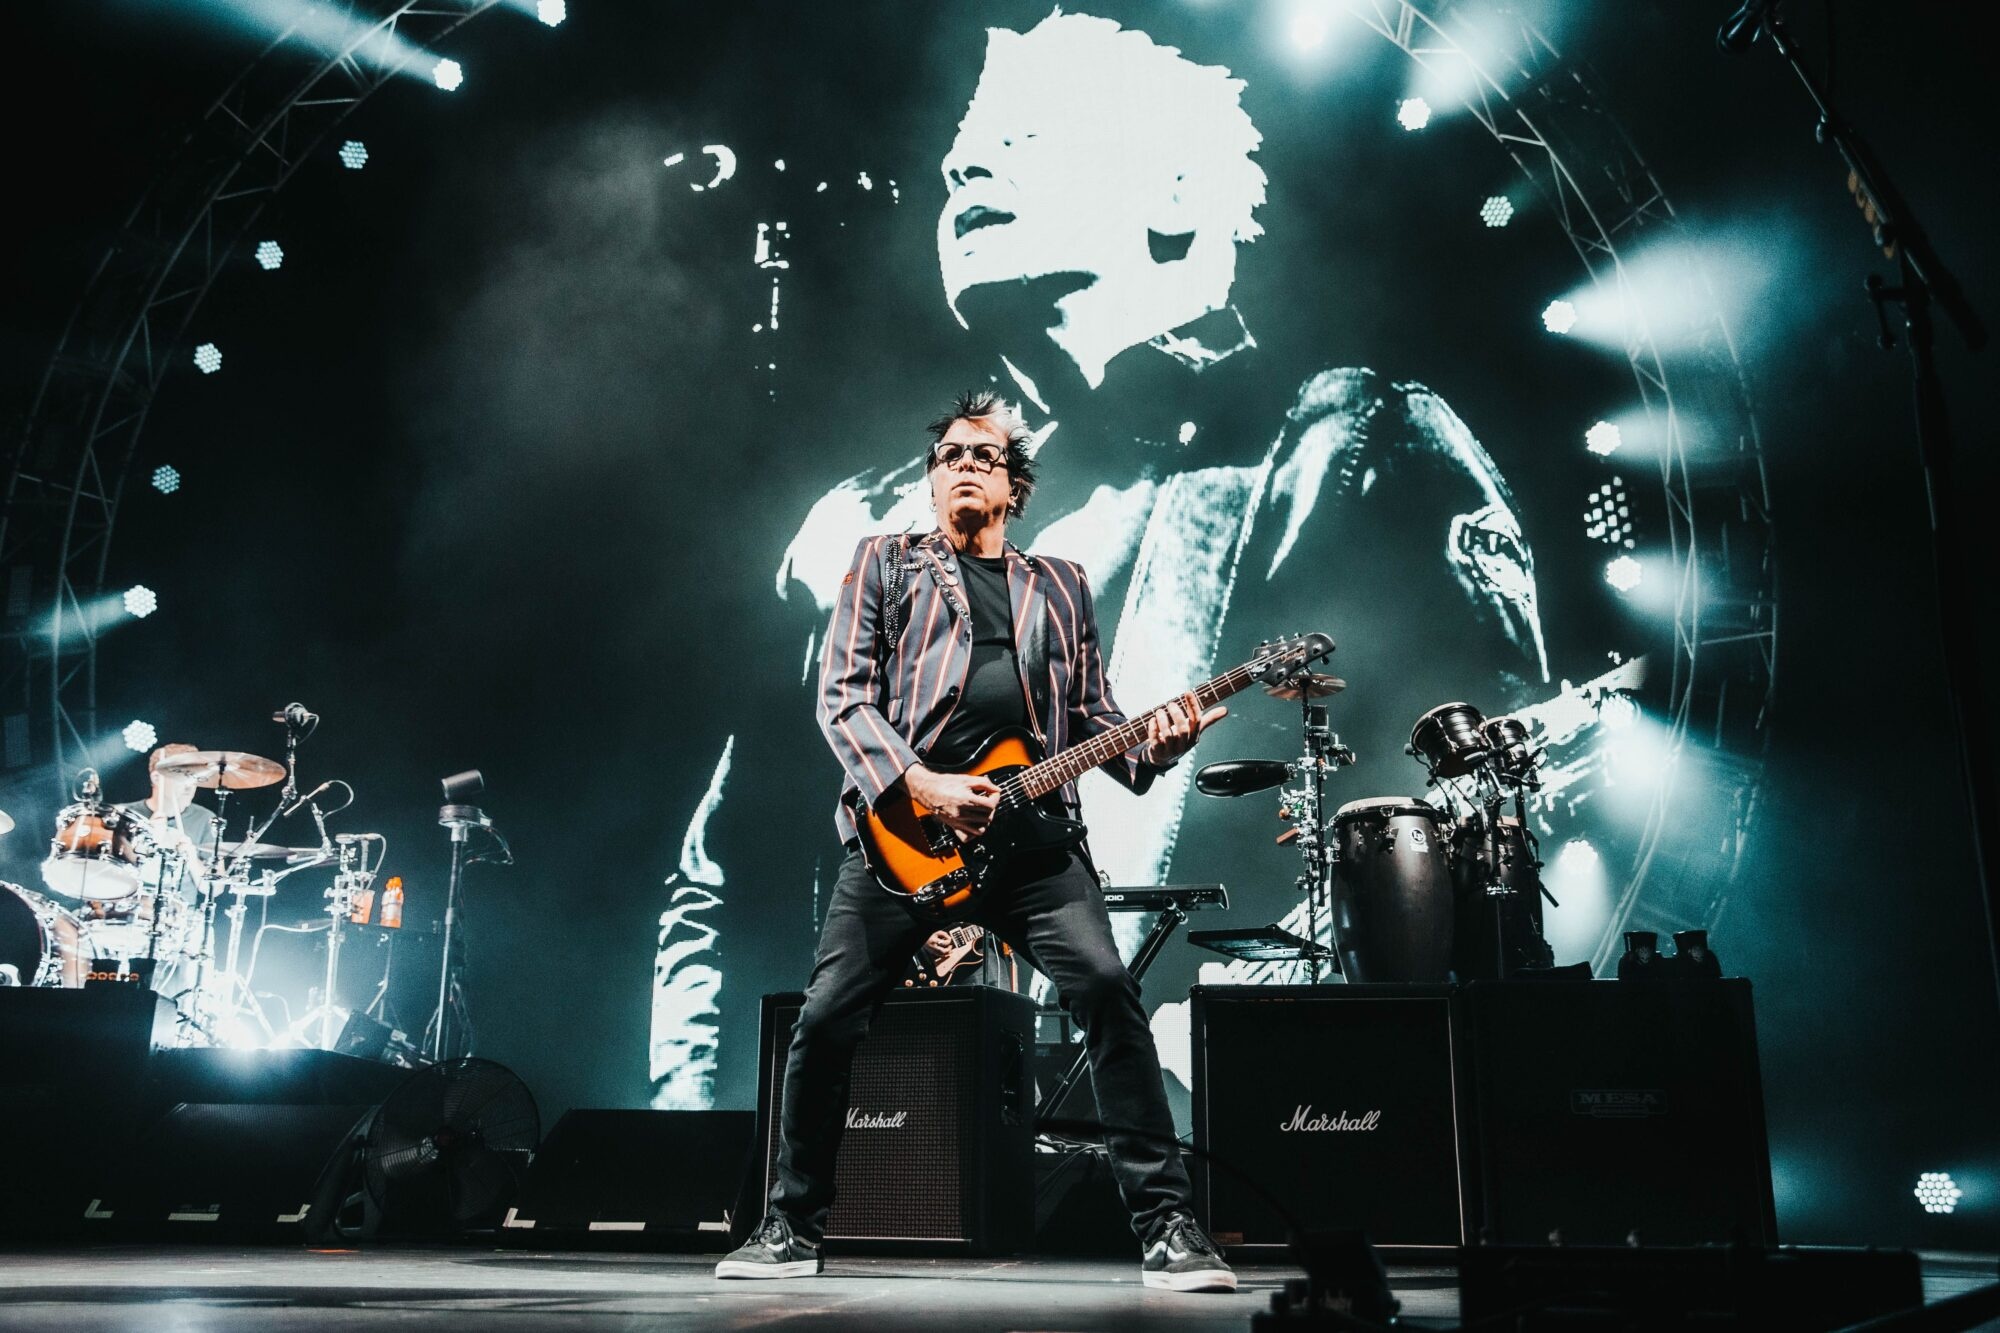 Noodles, The Offspring live review, AO Arena Manchester, Rock music, 2000x1340 HD Desktop